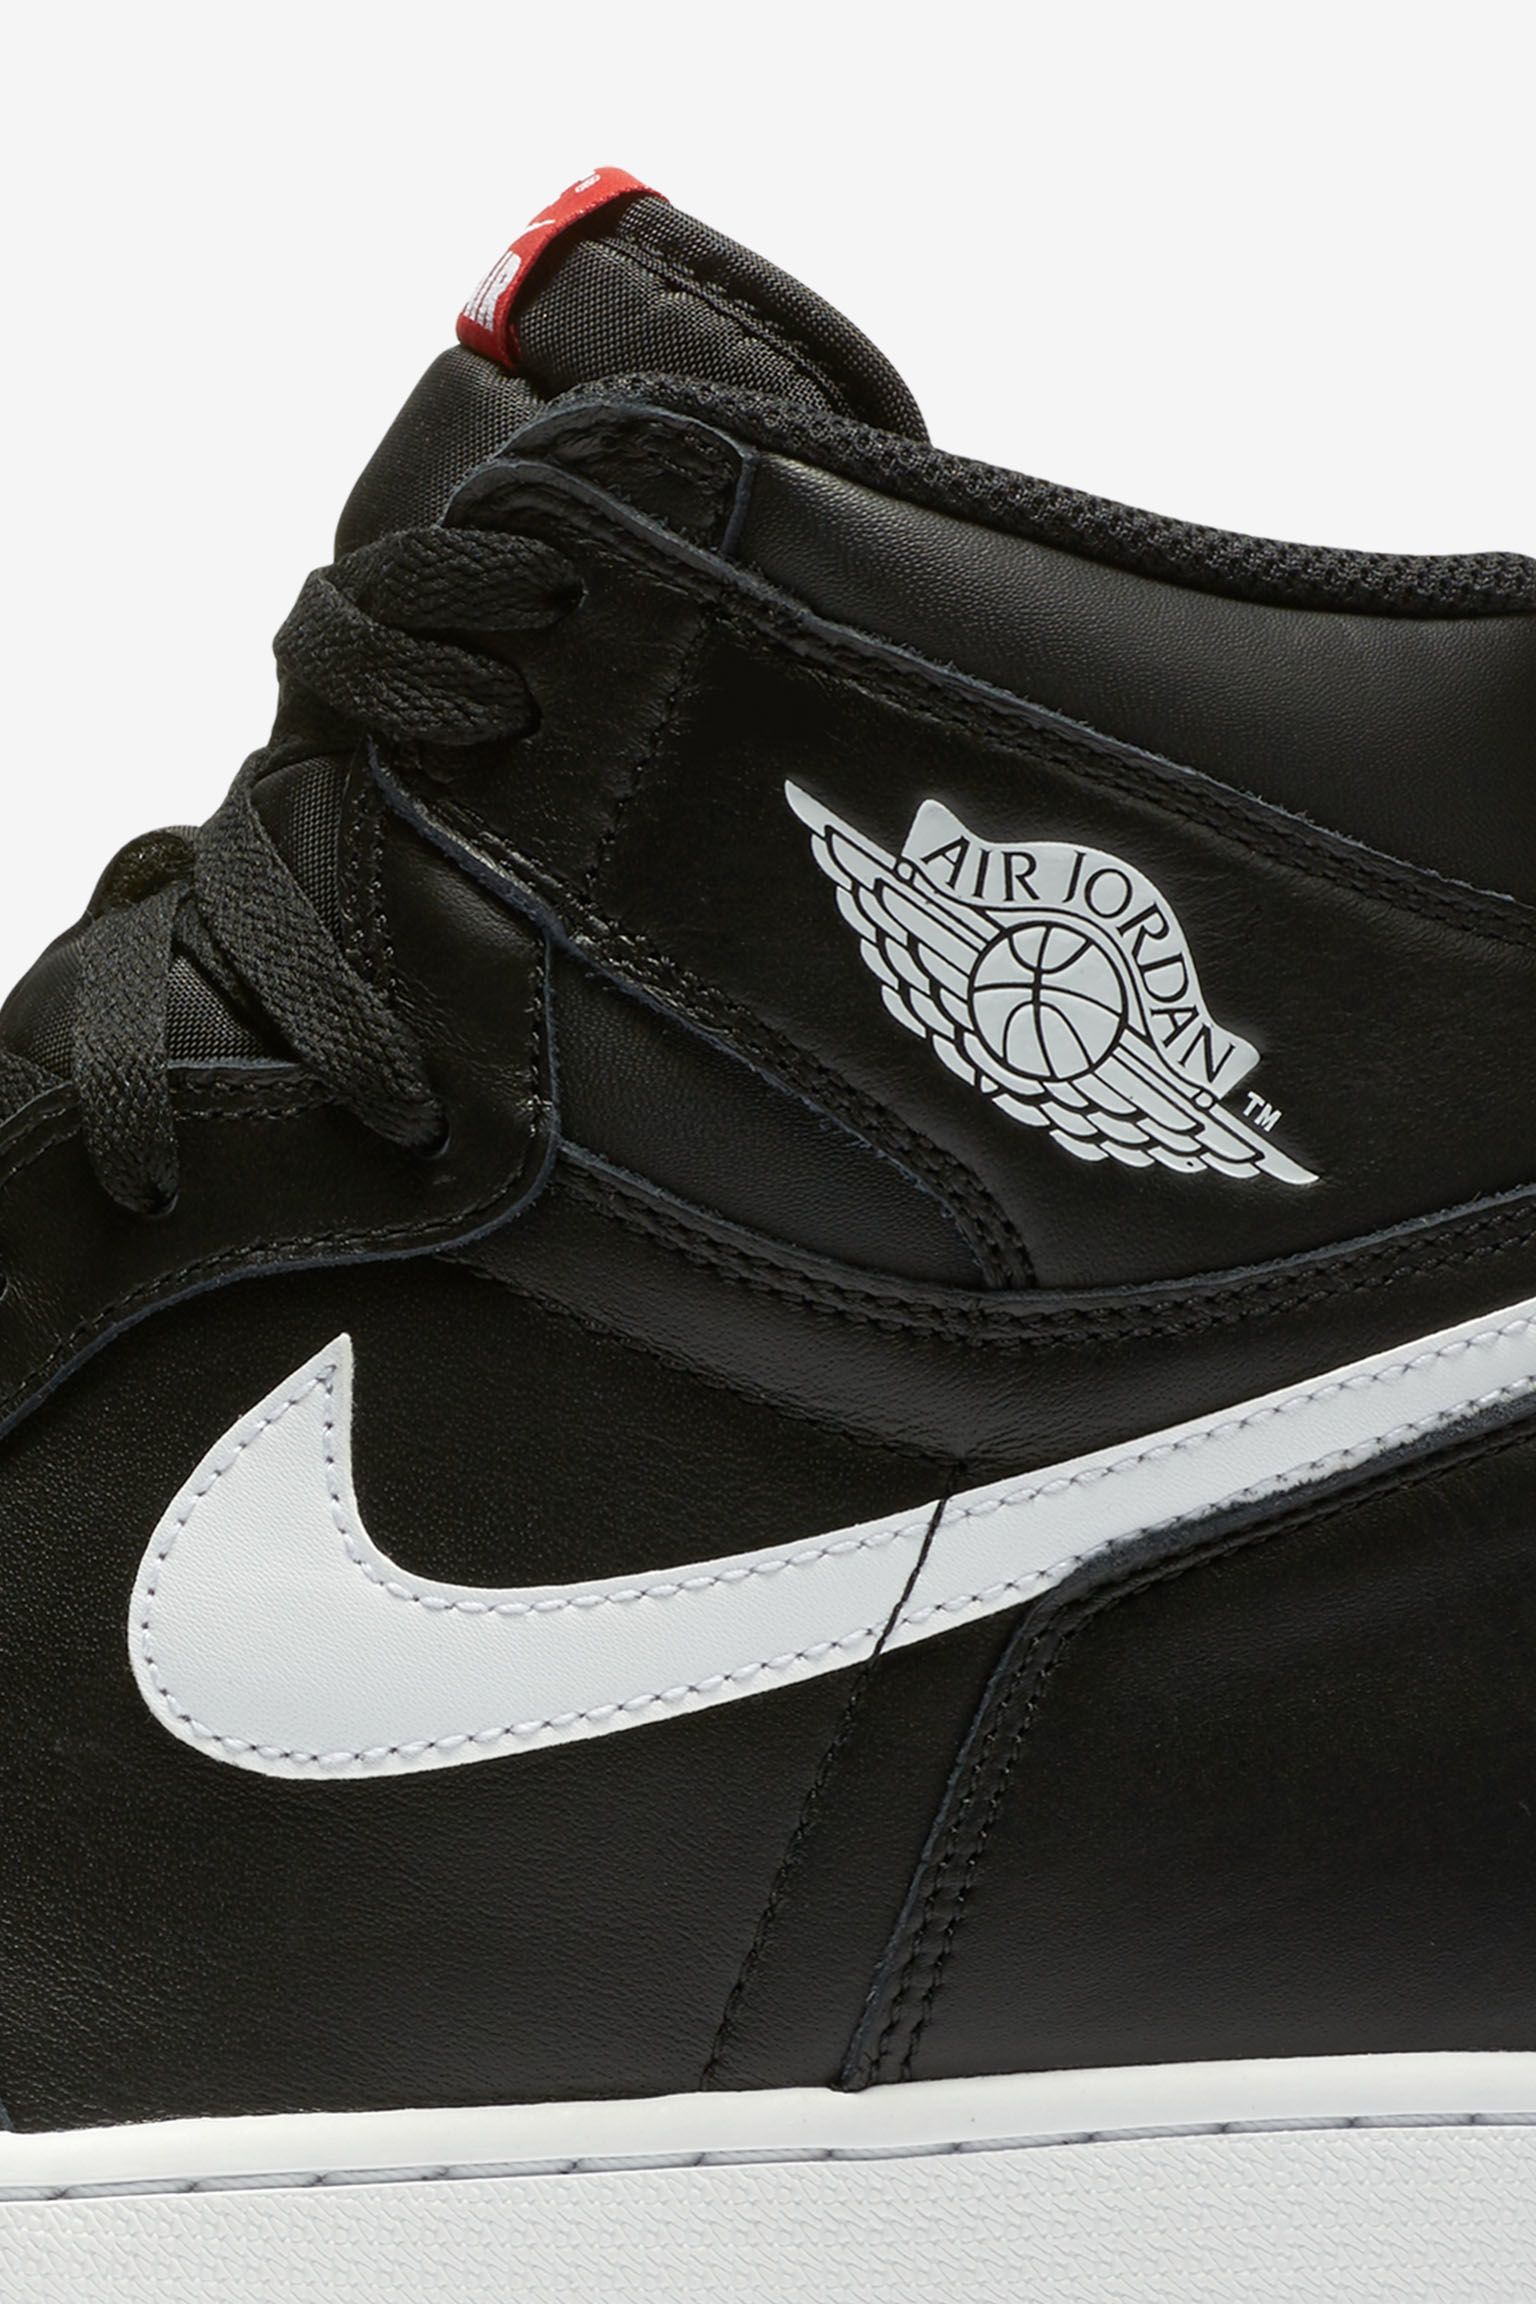 Air Jordan 1 Retro High OG 'Black & White' Release Date. Nike SNKRS الزيوت السبعه